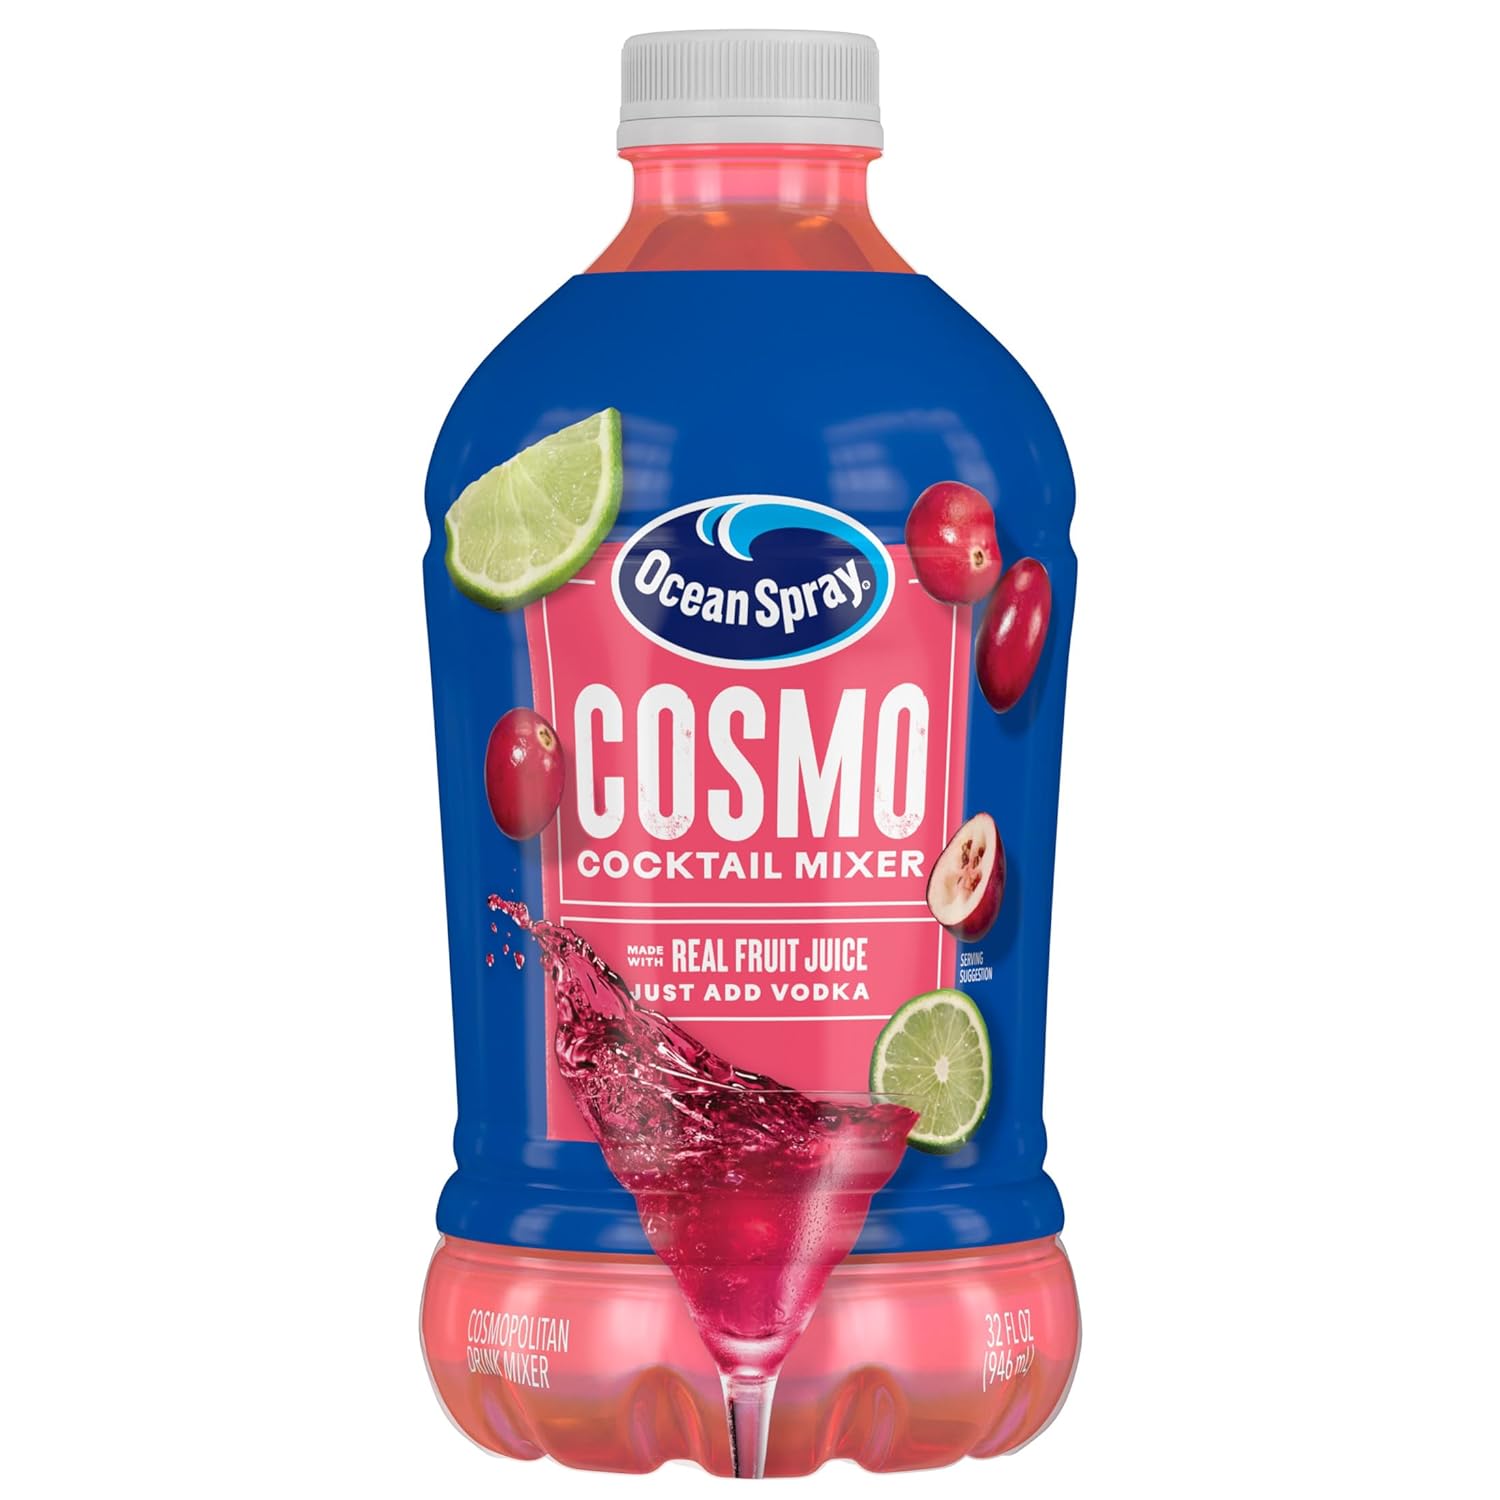 Ocean Spray® Cosmopolitan Cocktail Mixer, Drink Mixer Made with Real Fruit Juice, 32 Fl Oz Bottle